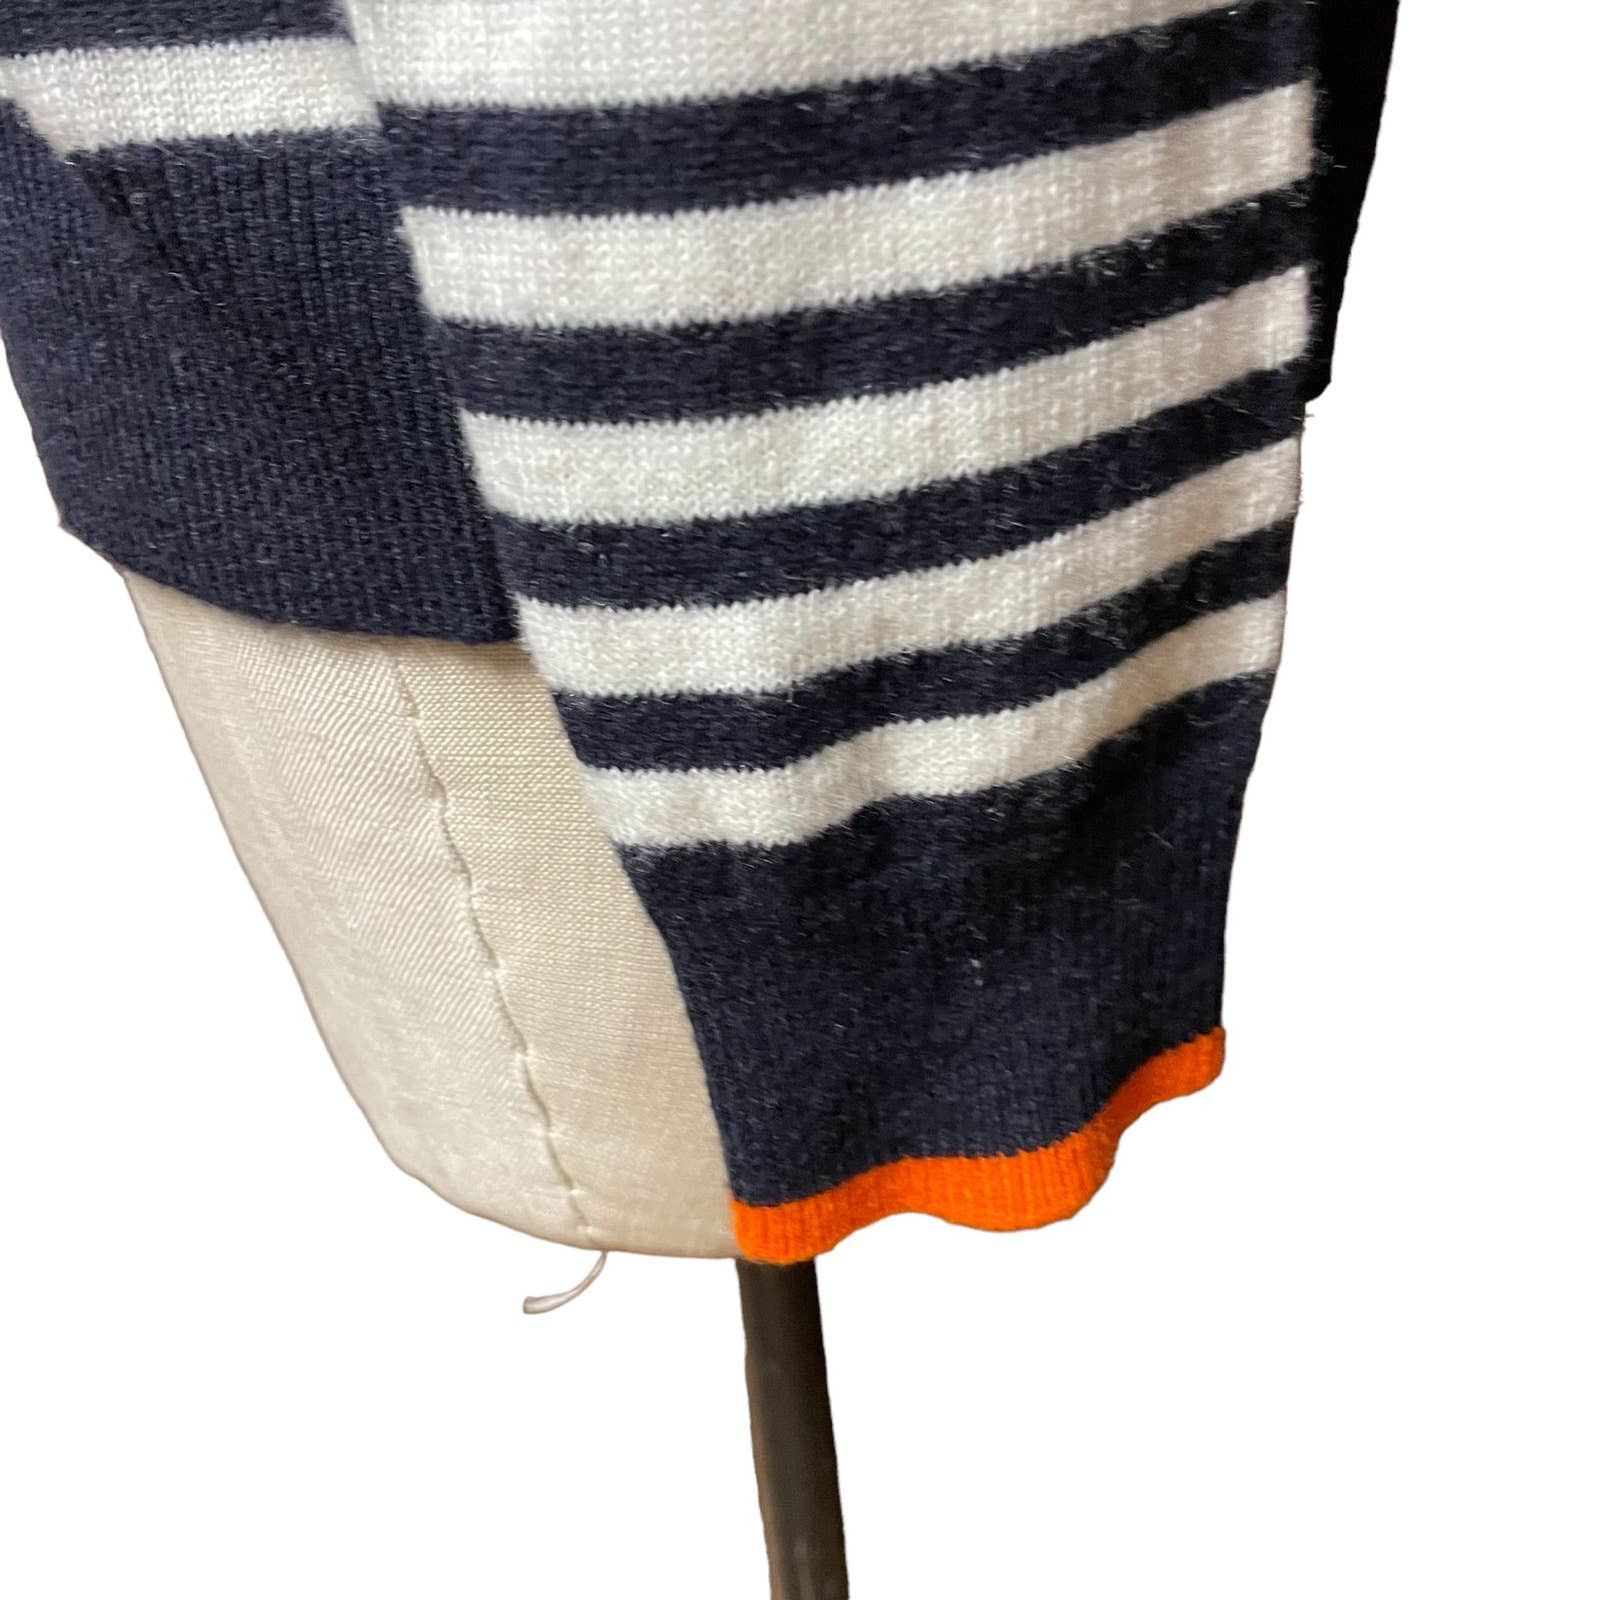 Chinti and Parker Chinti & Parker Navy Blue Cream Stripe Wool Cashmere Sweater Size M / US 6-8 / IT 42-44 - 5 Thumbnail